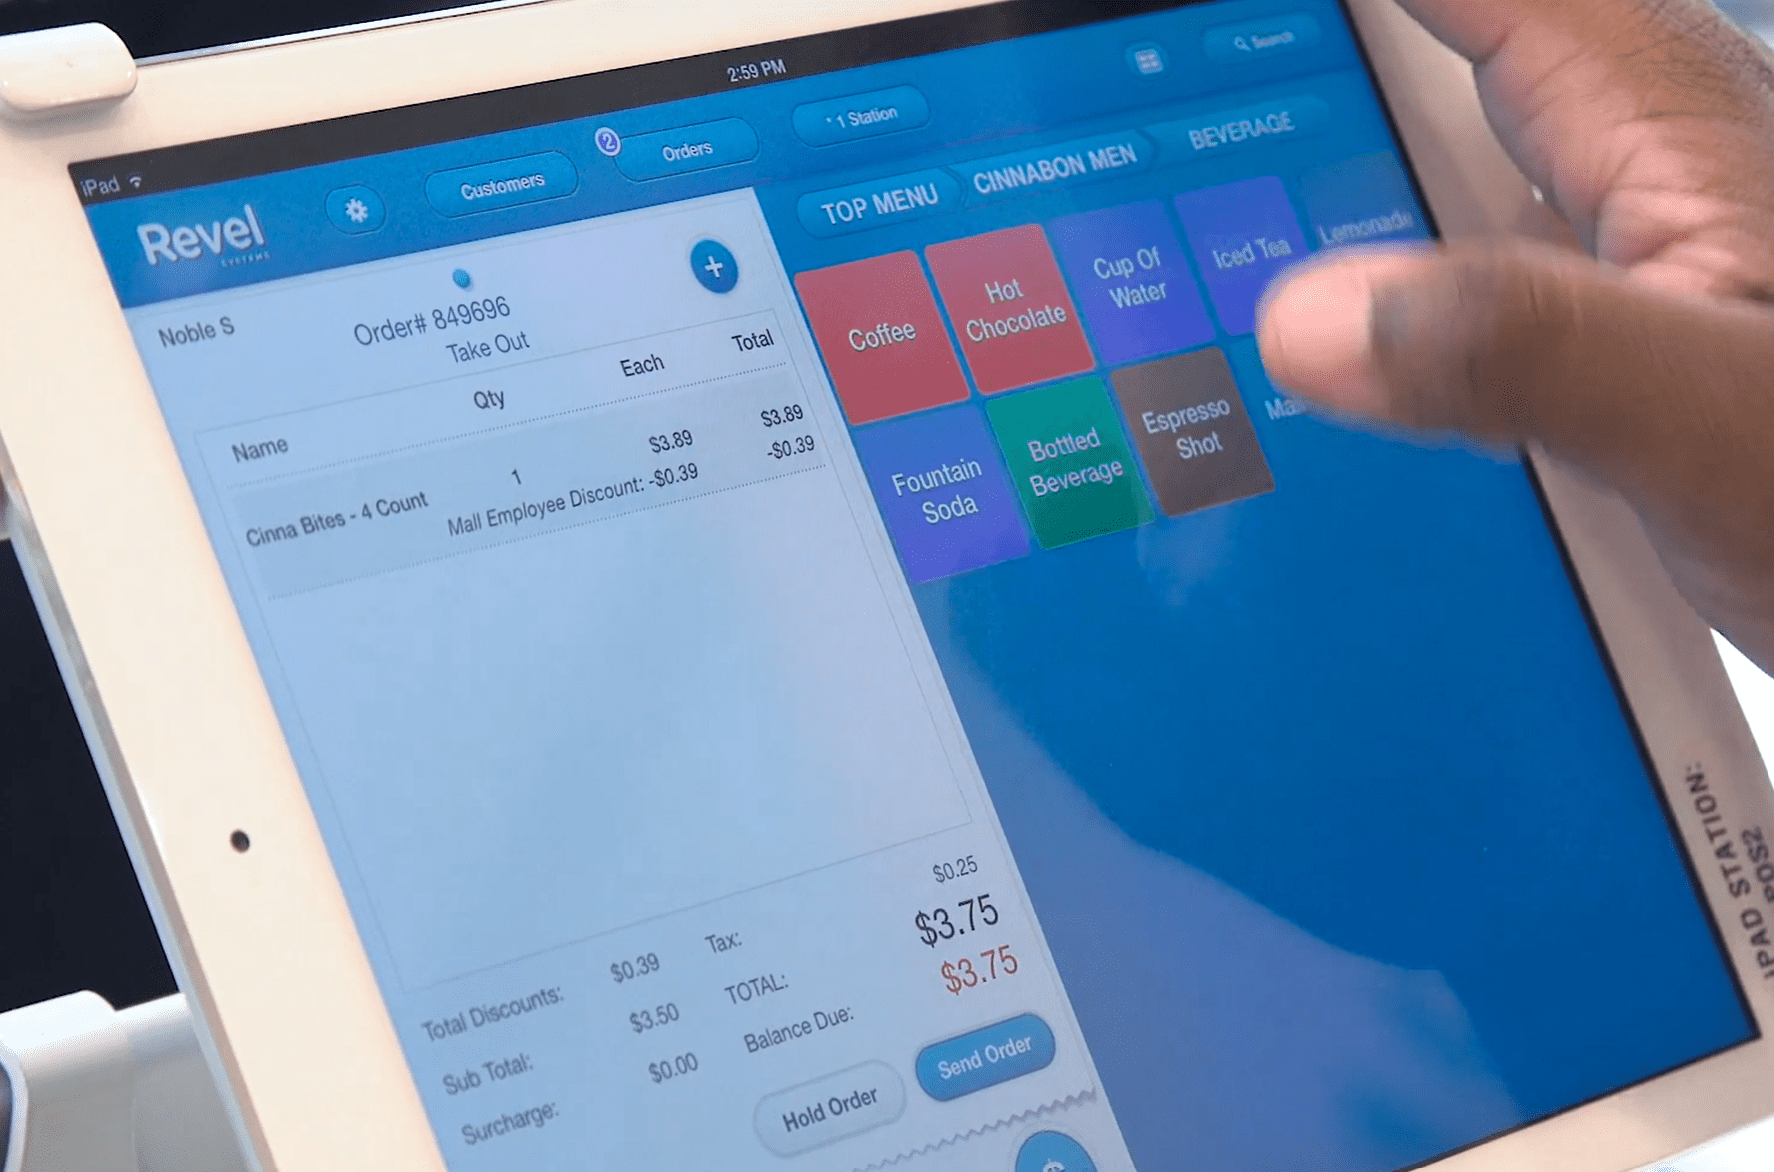 Photo of Revel tablet POS interface ordering system for restaurants